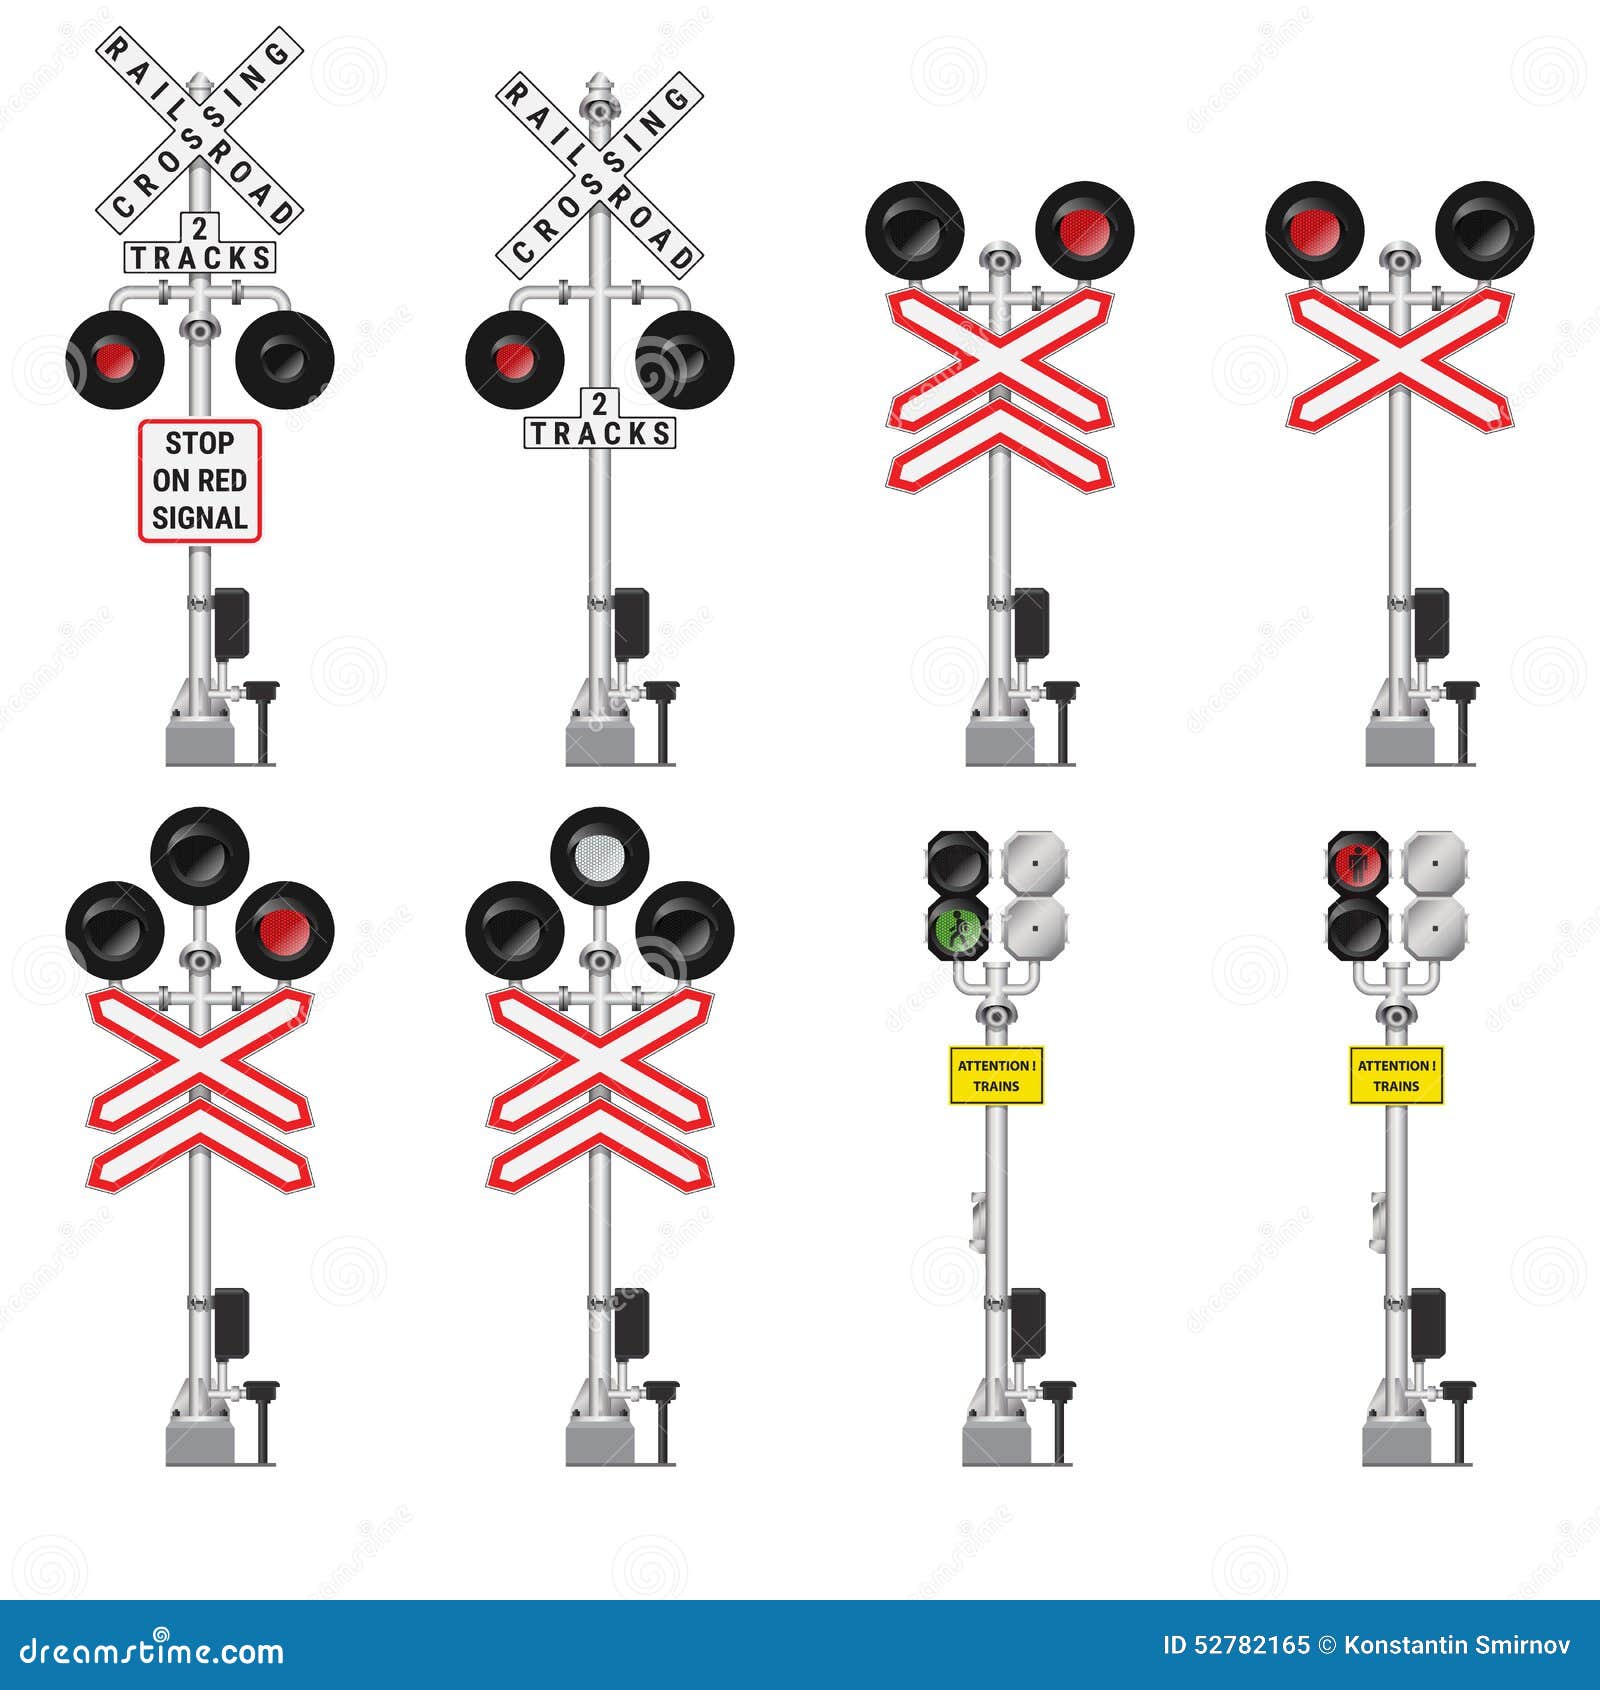 railway crossing signals